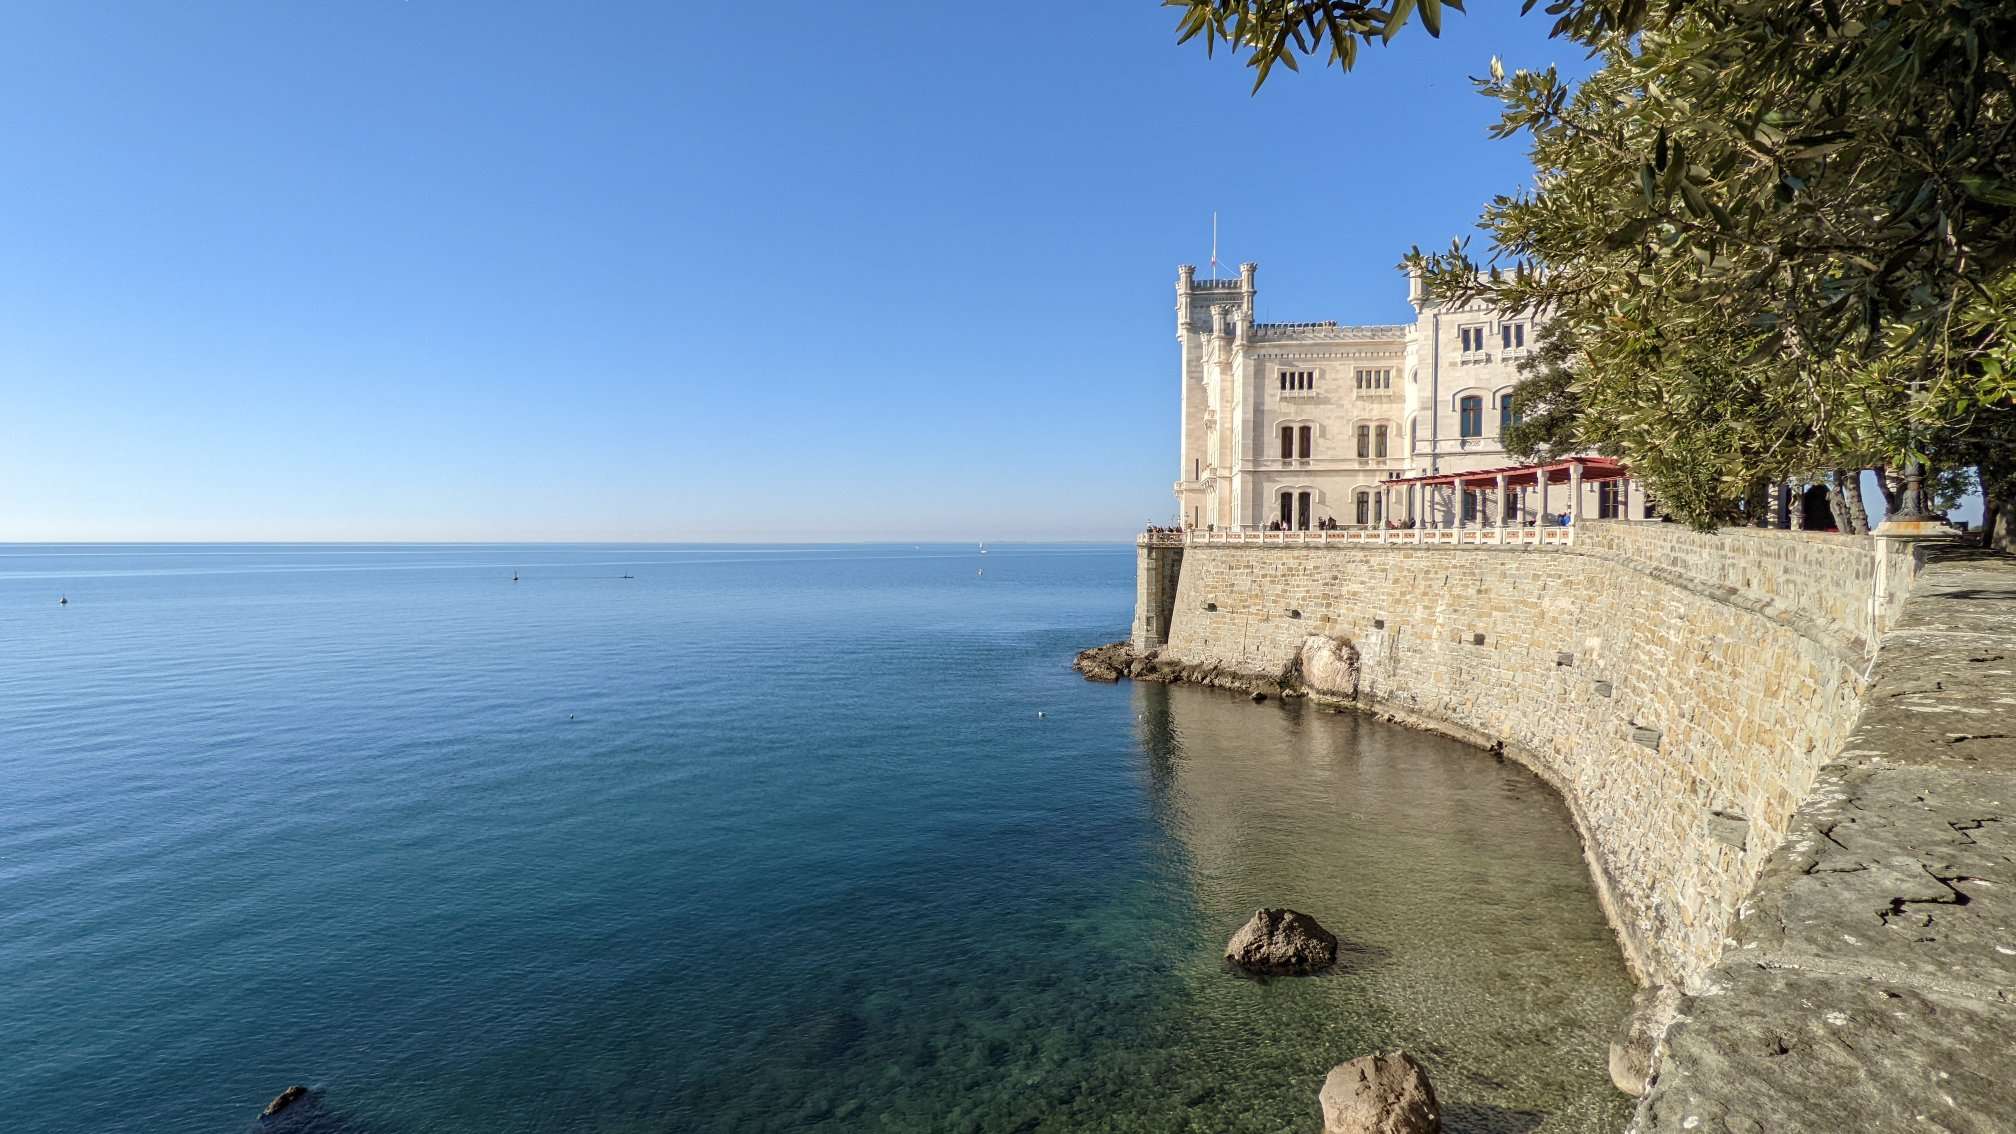 Miramare Castle, Trieste, Italy - Credits to Alessandra Laderchi